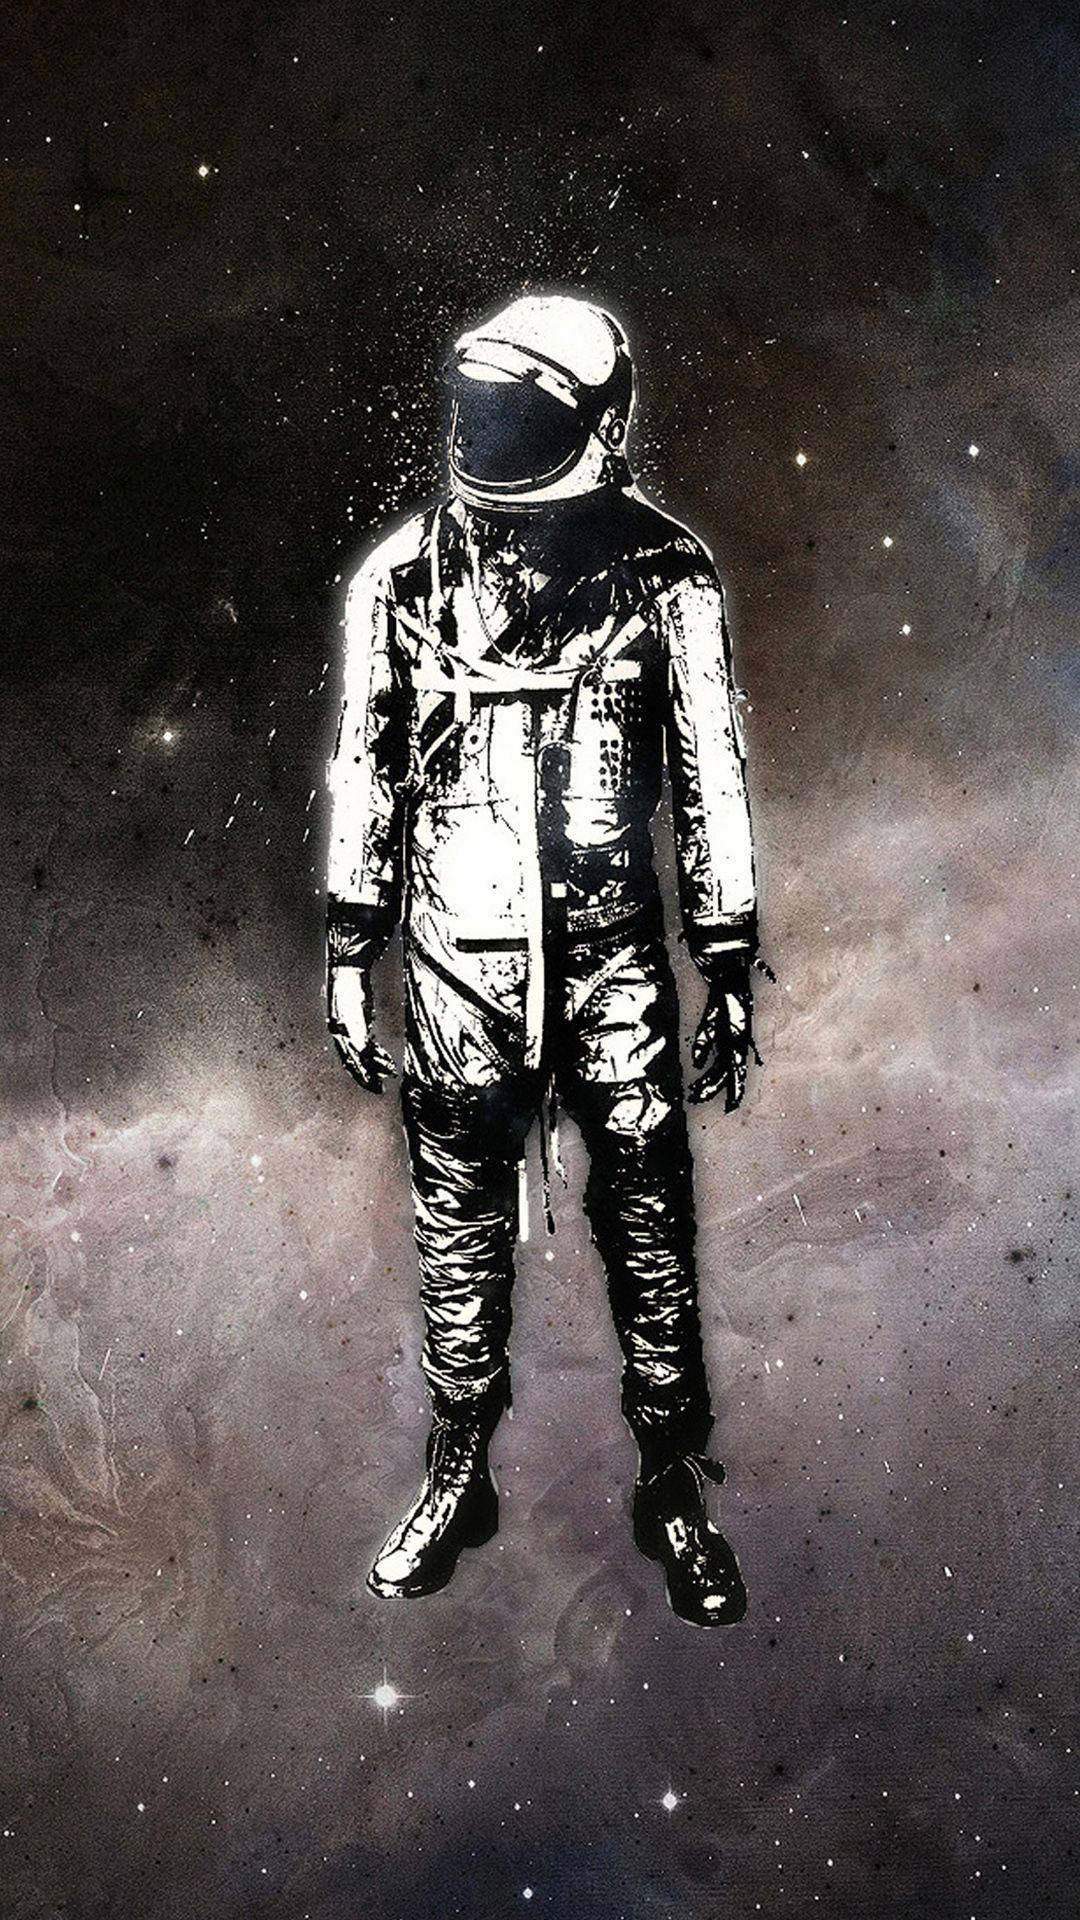 Thrilling Image Of Spaceman Wallpaper